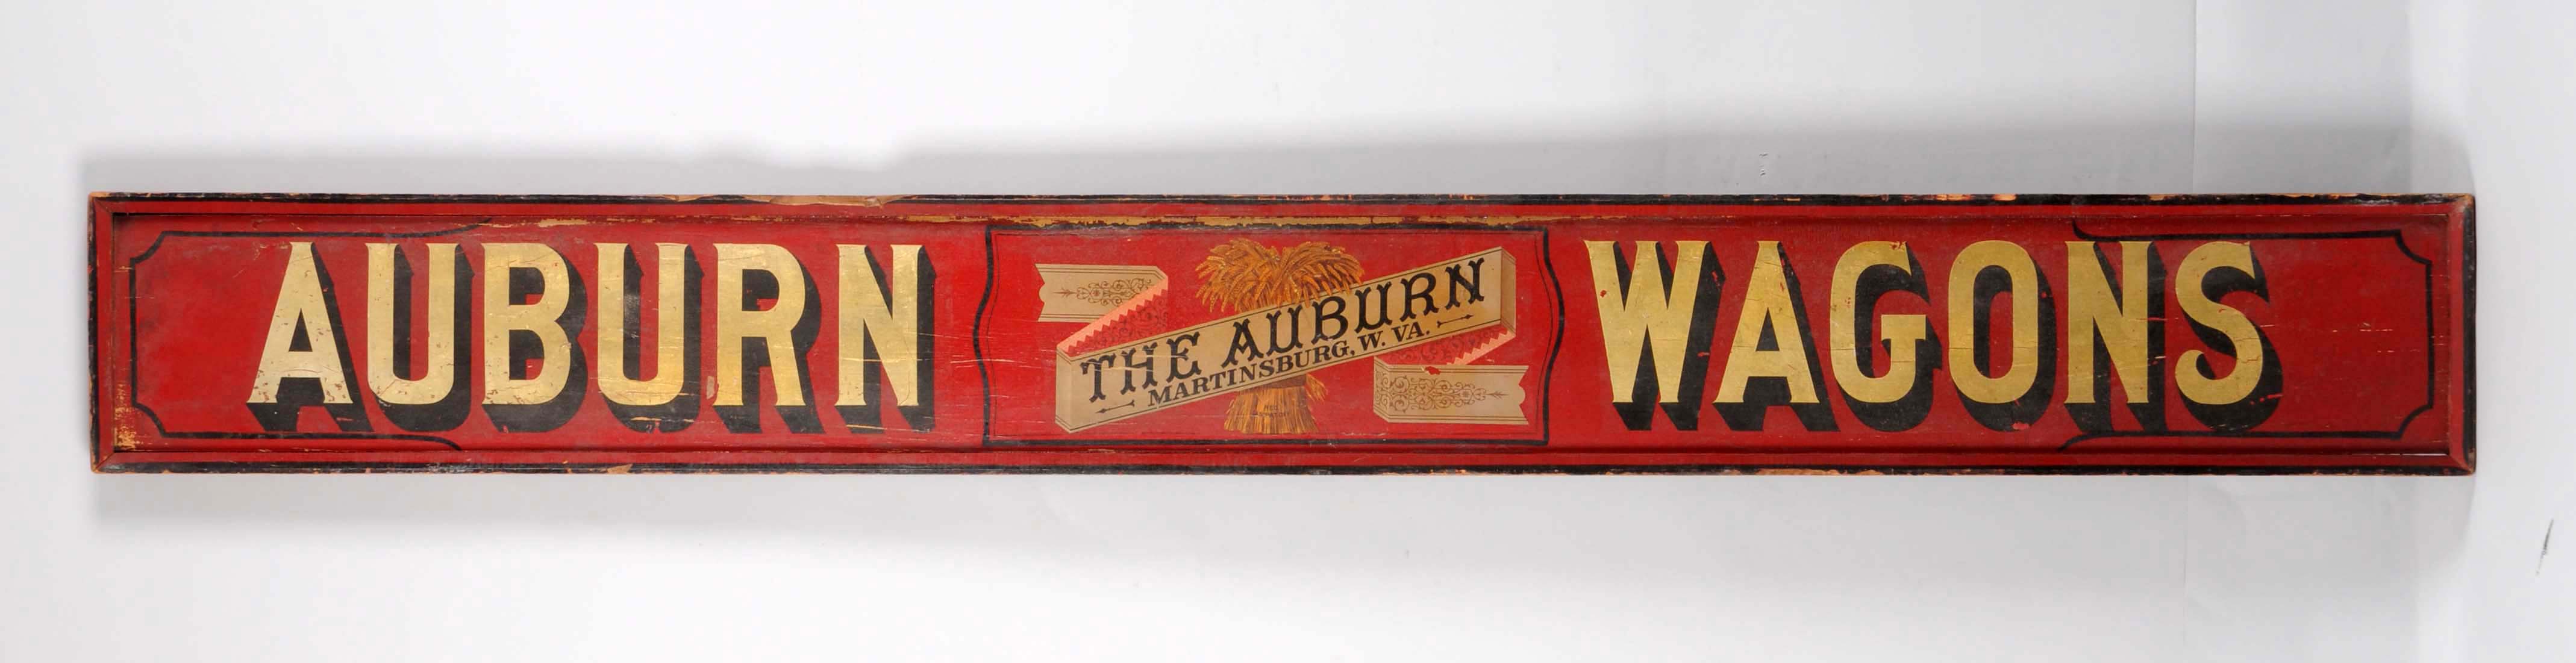 Auburn Wagons Advertising Trade Sign, estimated at $8,000-15,000.